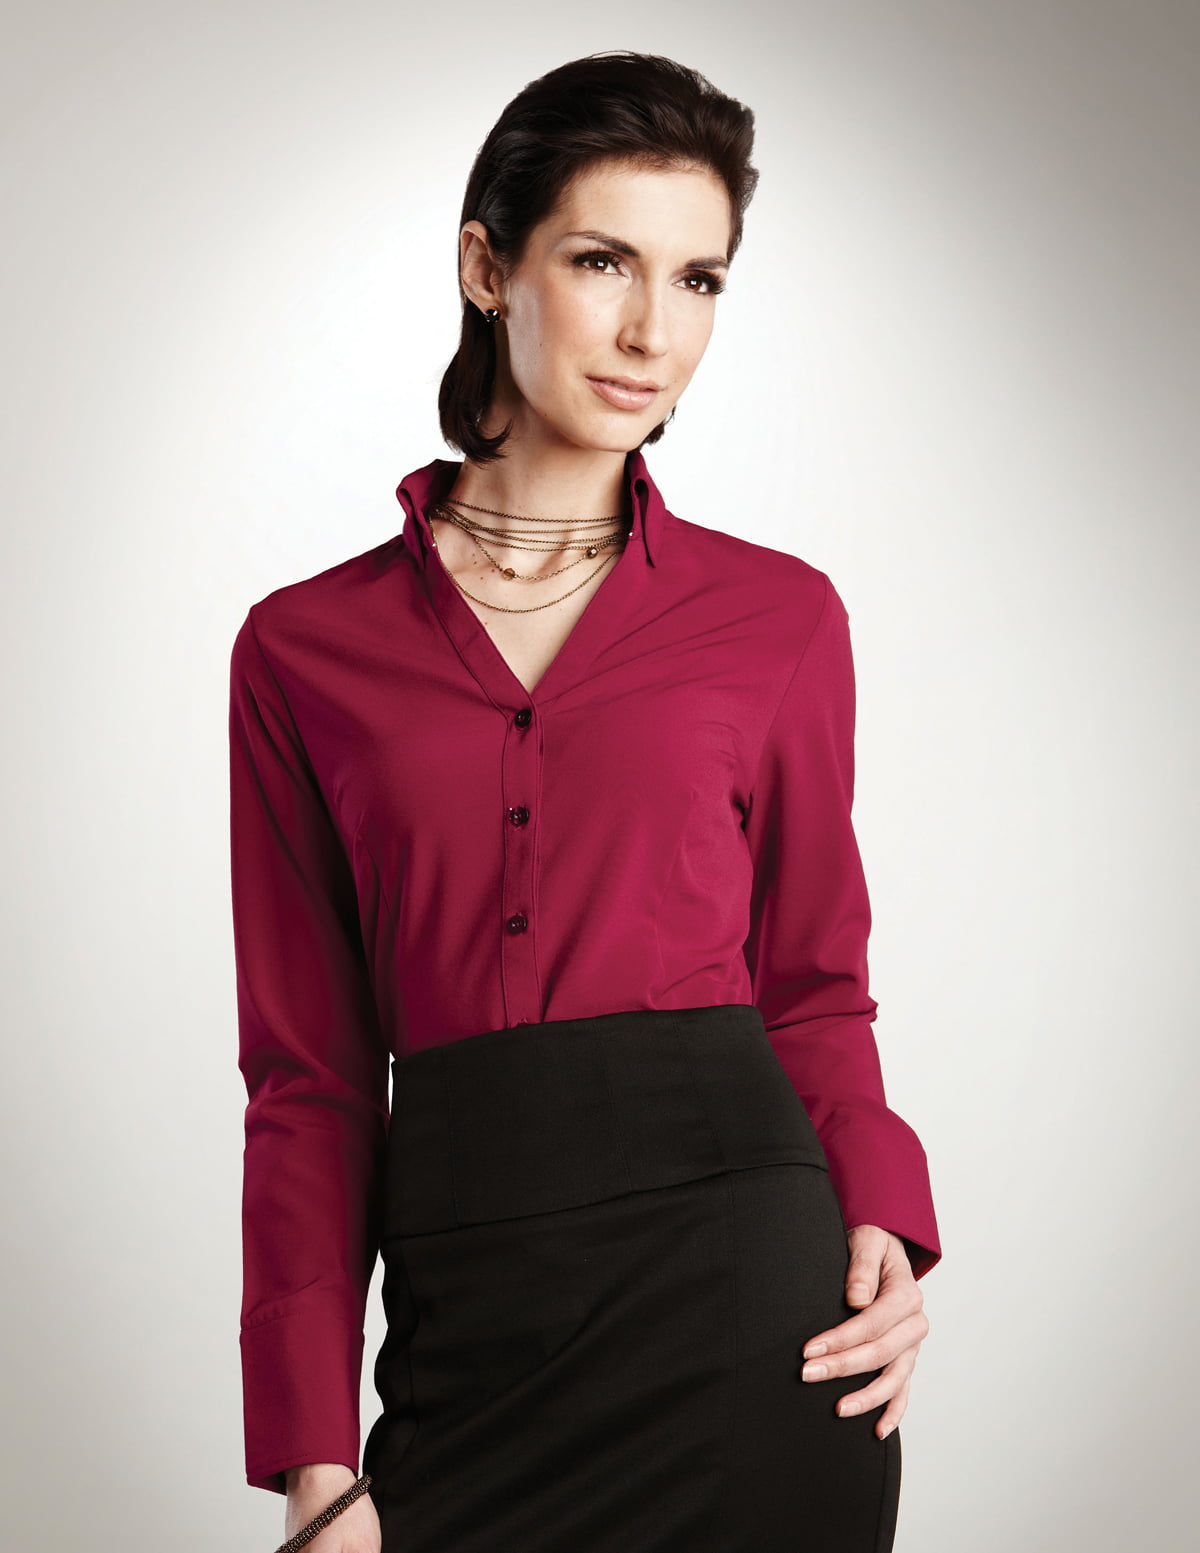 Tri-Mountain Lilac Bloom Meredith LB757 Stylish Woven Shirt, Medium, Deep  Scarlet | T-Shirts